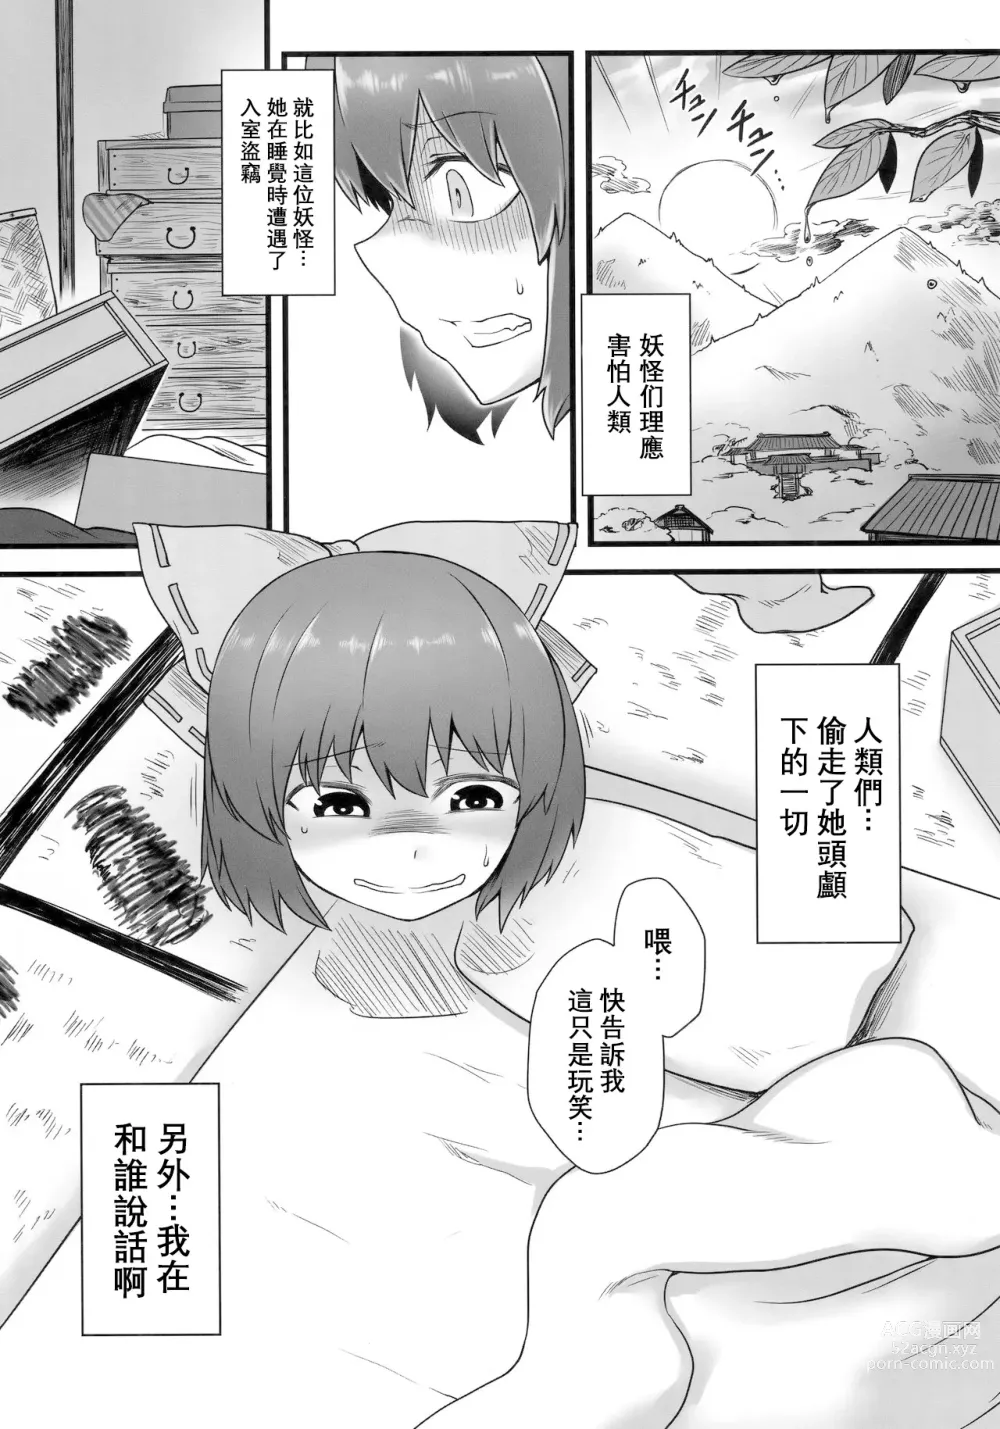 Page 3 of doujinshi 泄器蛮奇